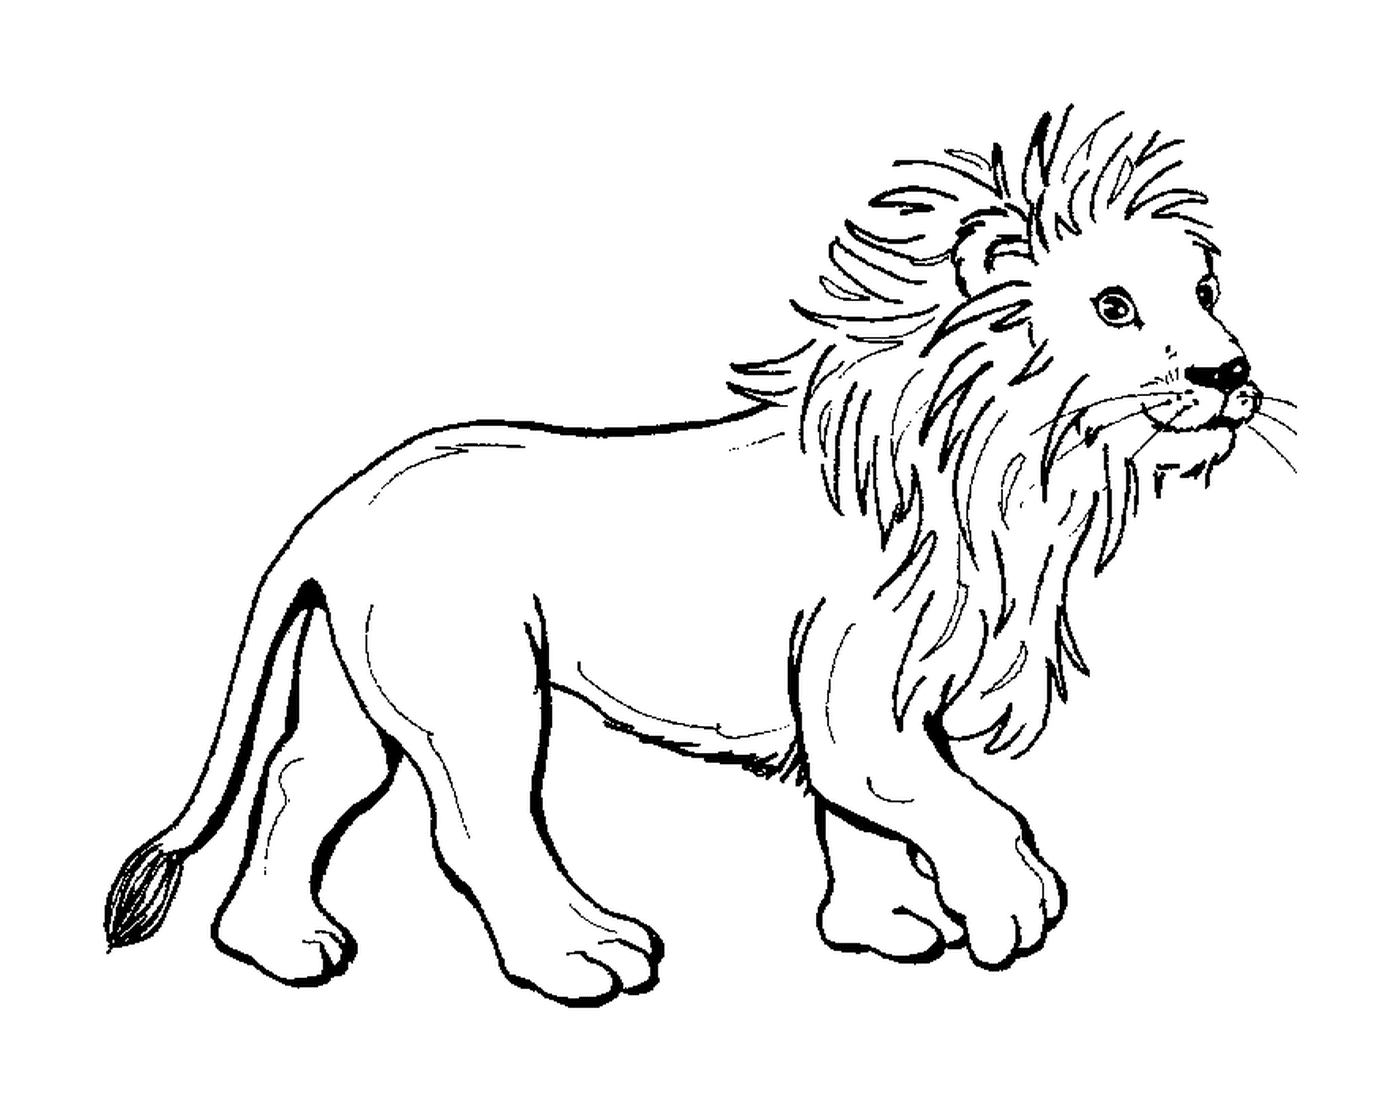  Leão jovem e majestoso 